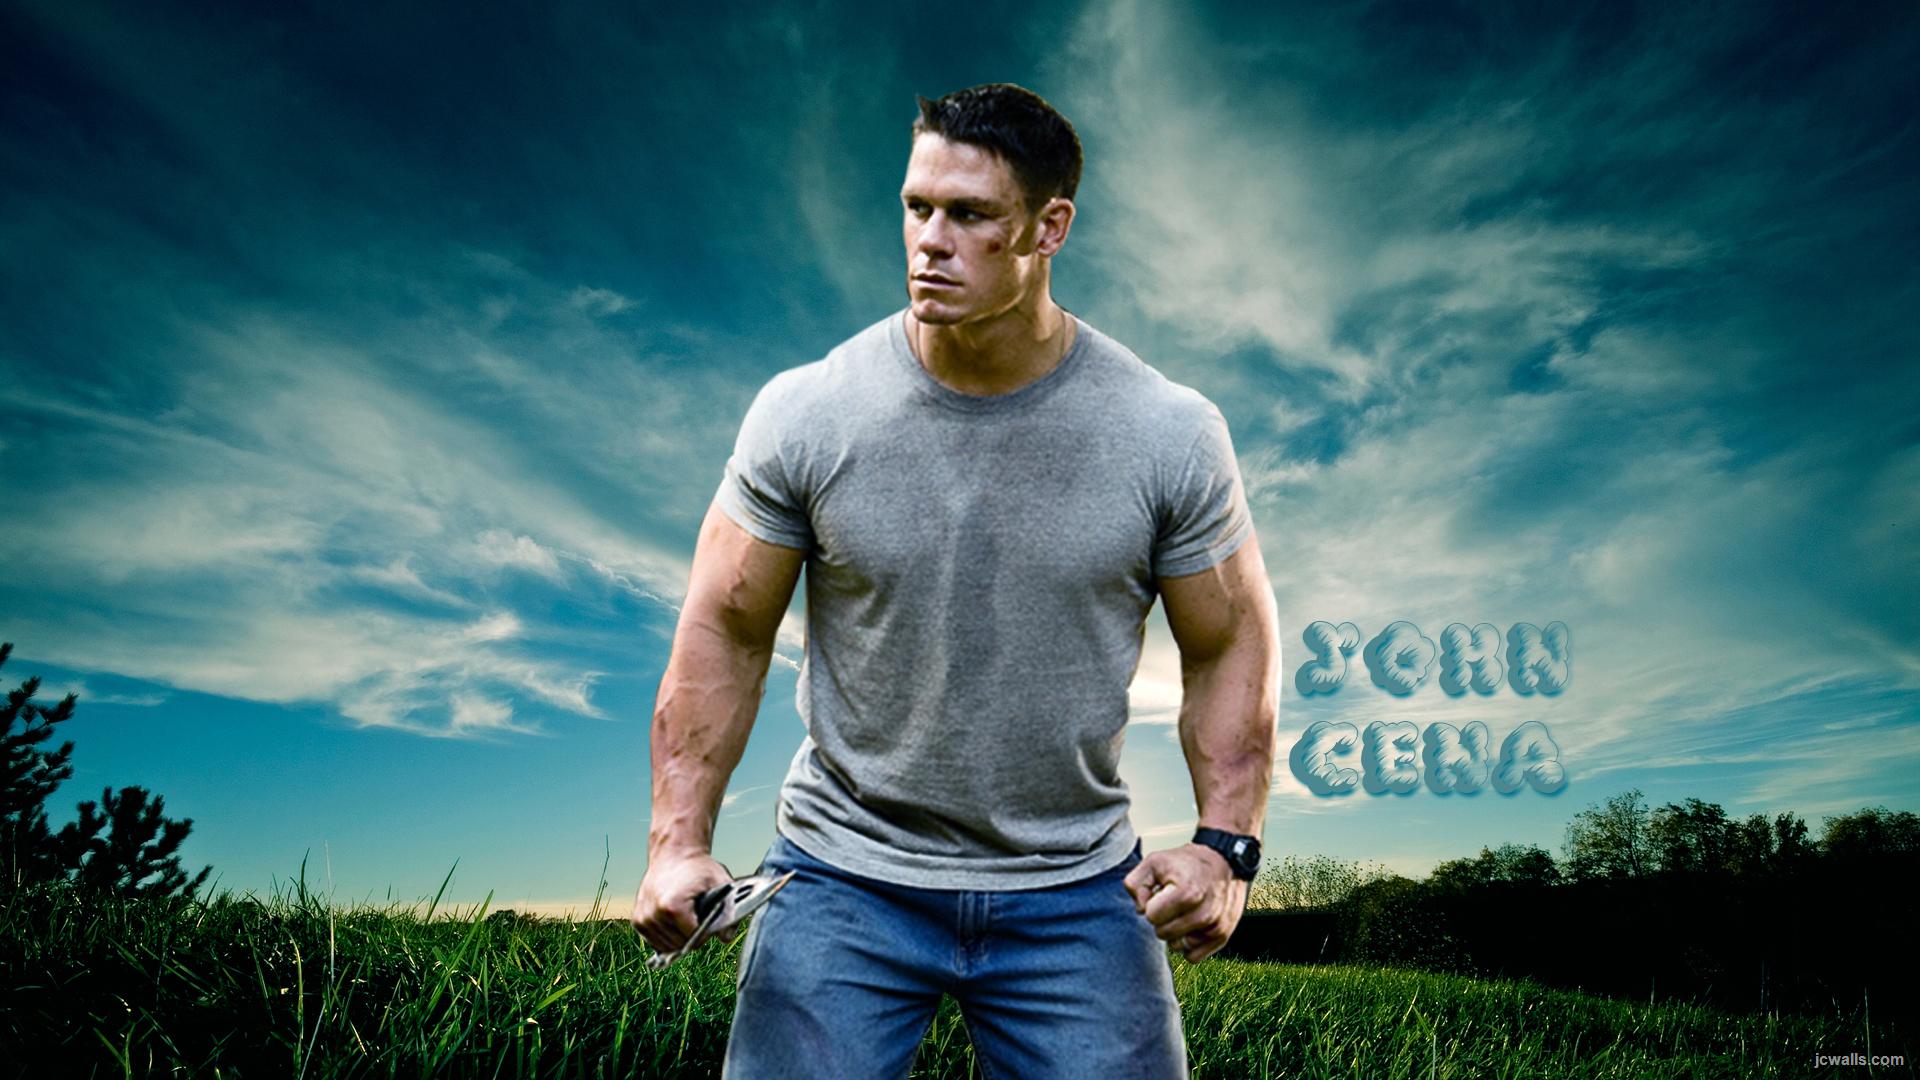 John Cena HD Wallpaper And Image